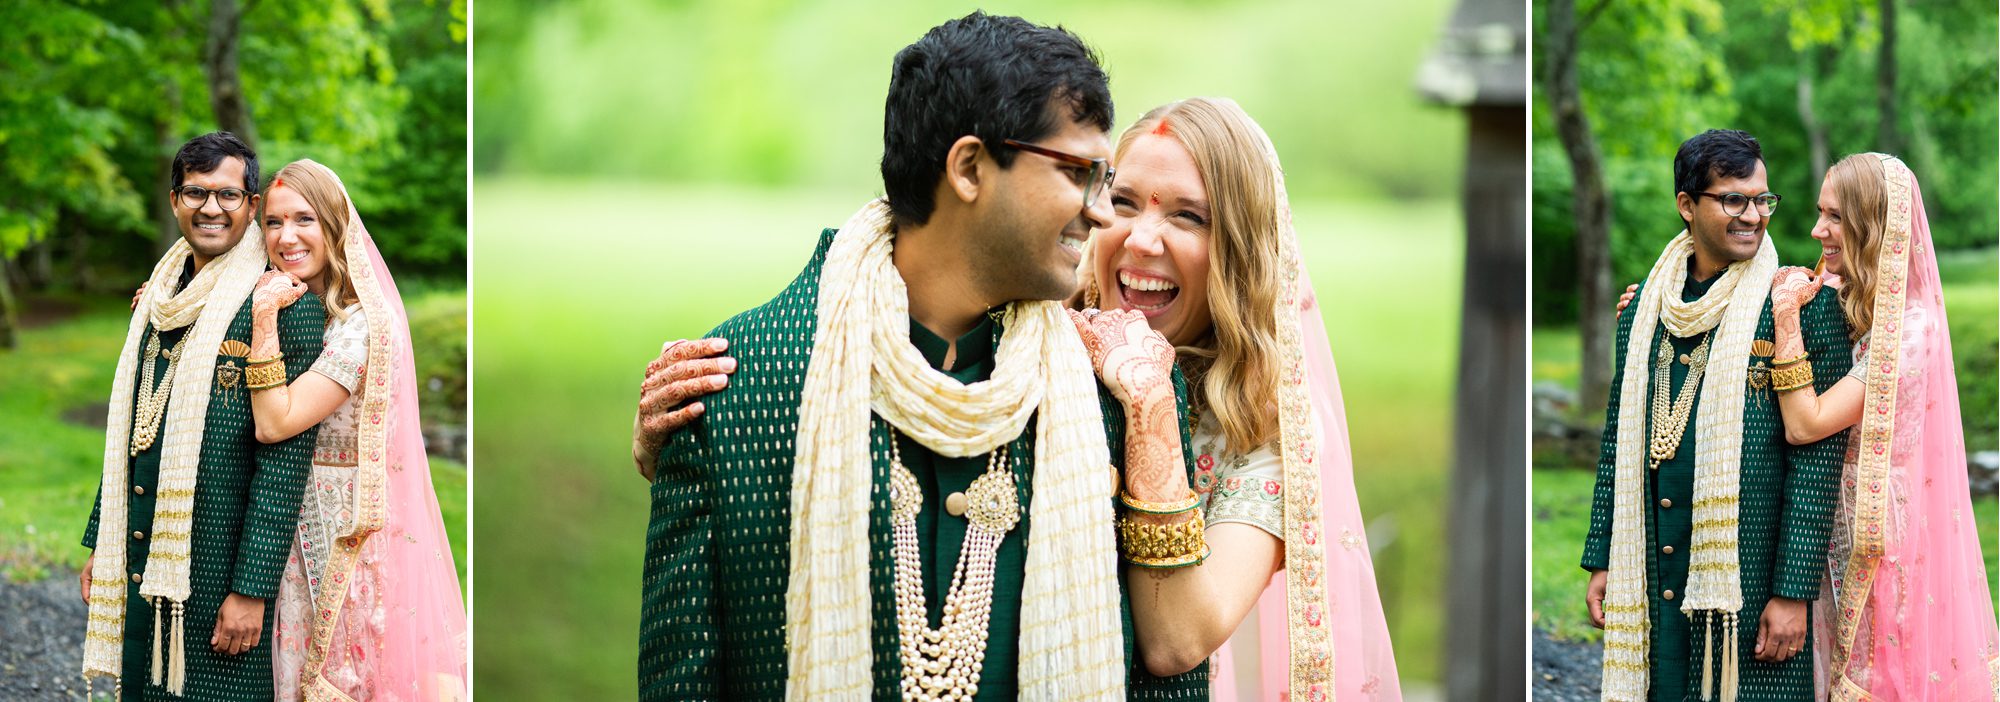 Indian wedding portraits at Full Moon Resort